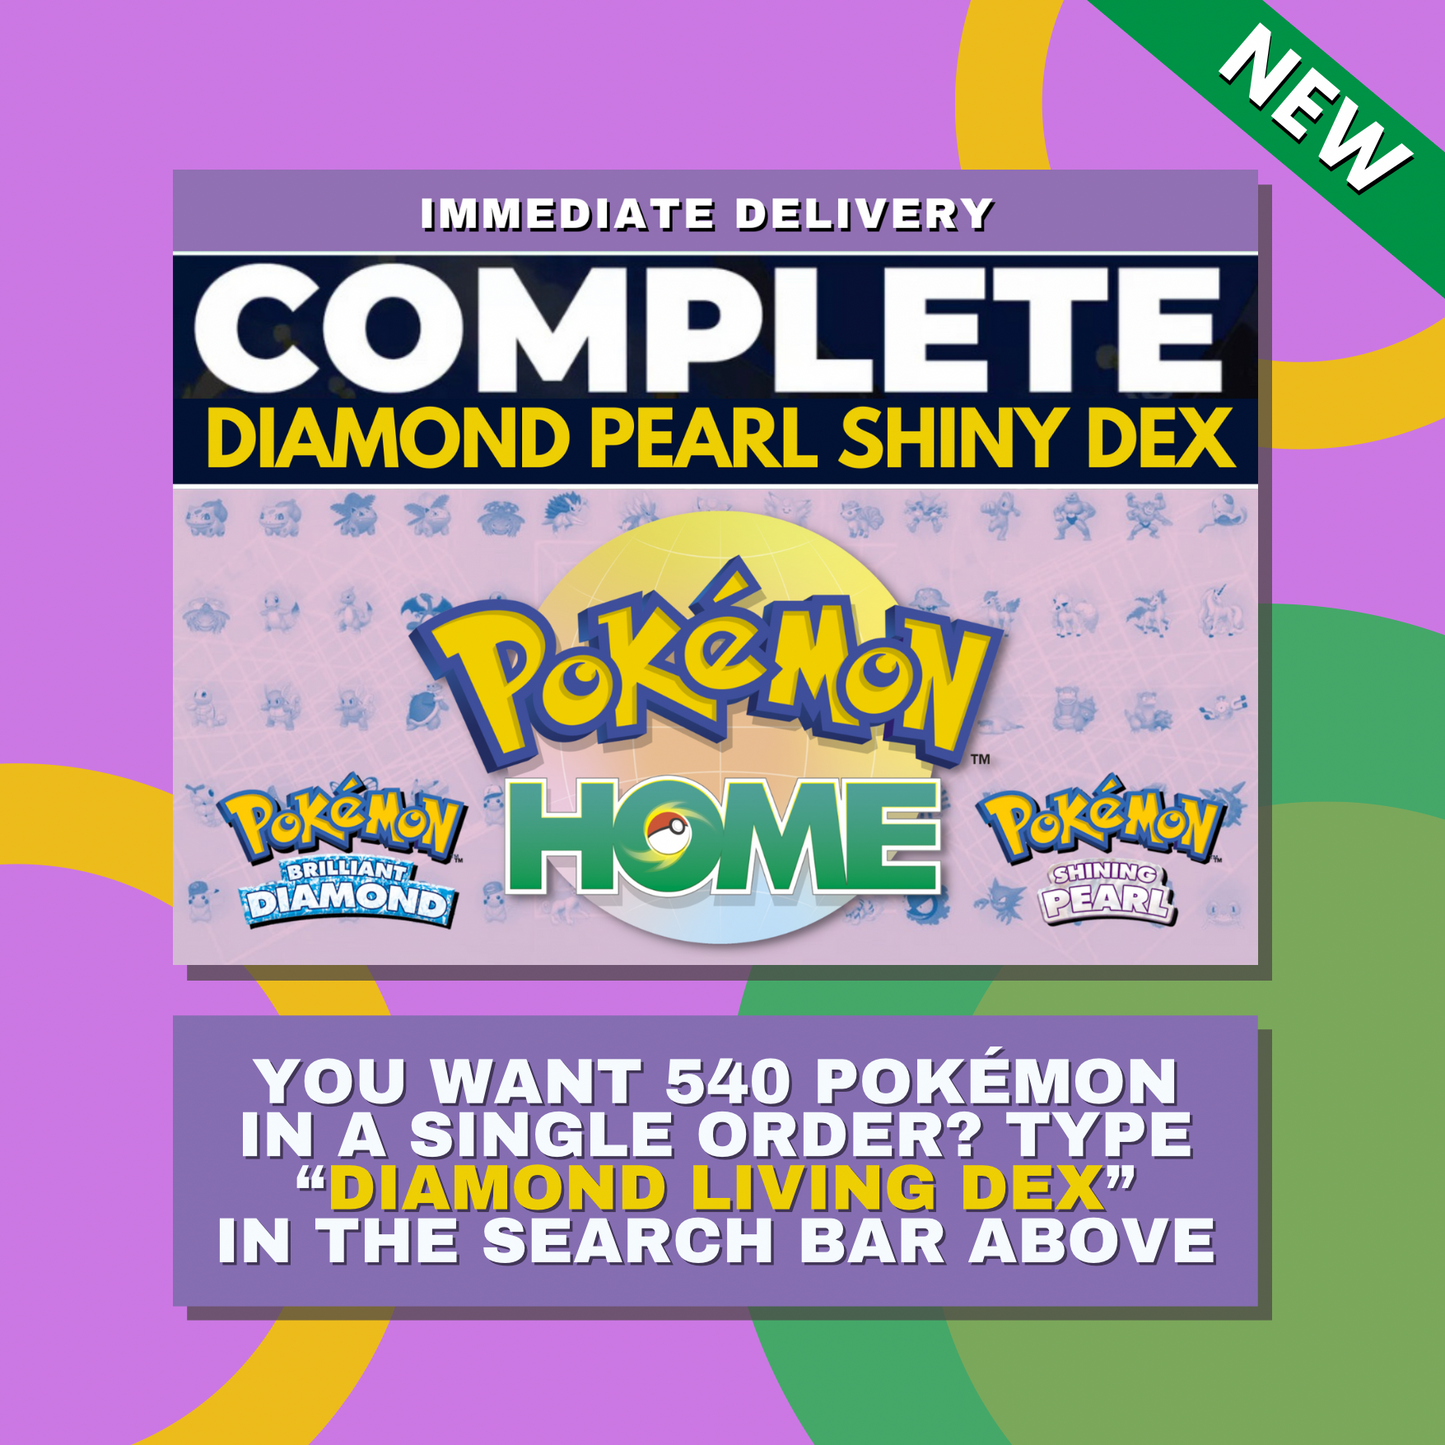 Ambipom Shiny ✨ or Non Shiny Pokémon Brilliant Diamond Shining Pearl Battle Ready 6 IV Competitive 100% Legit Level 100 Customizable Custom OT by Shiny Living Dex | Shiny Living Dex